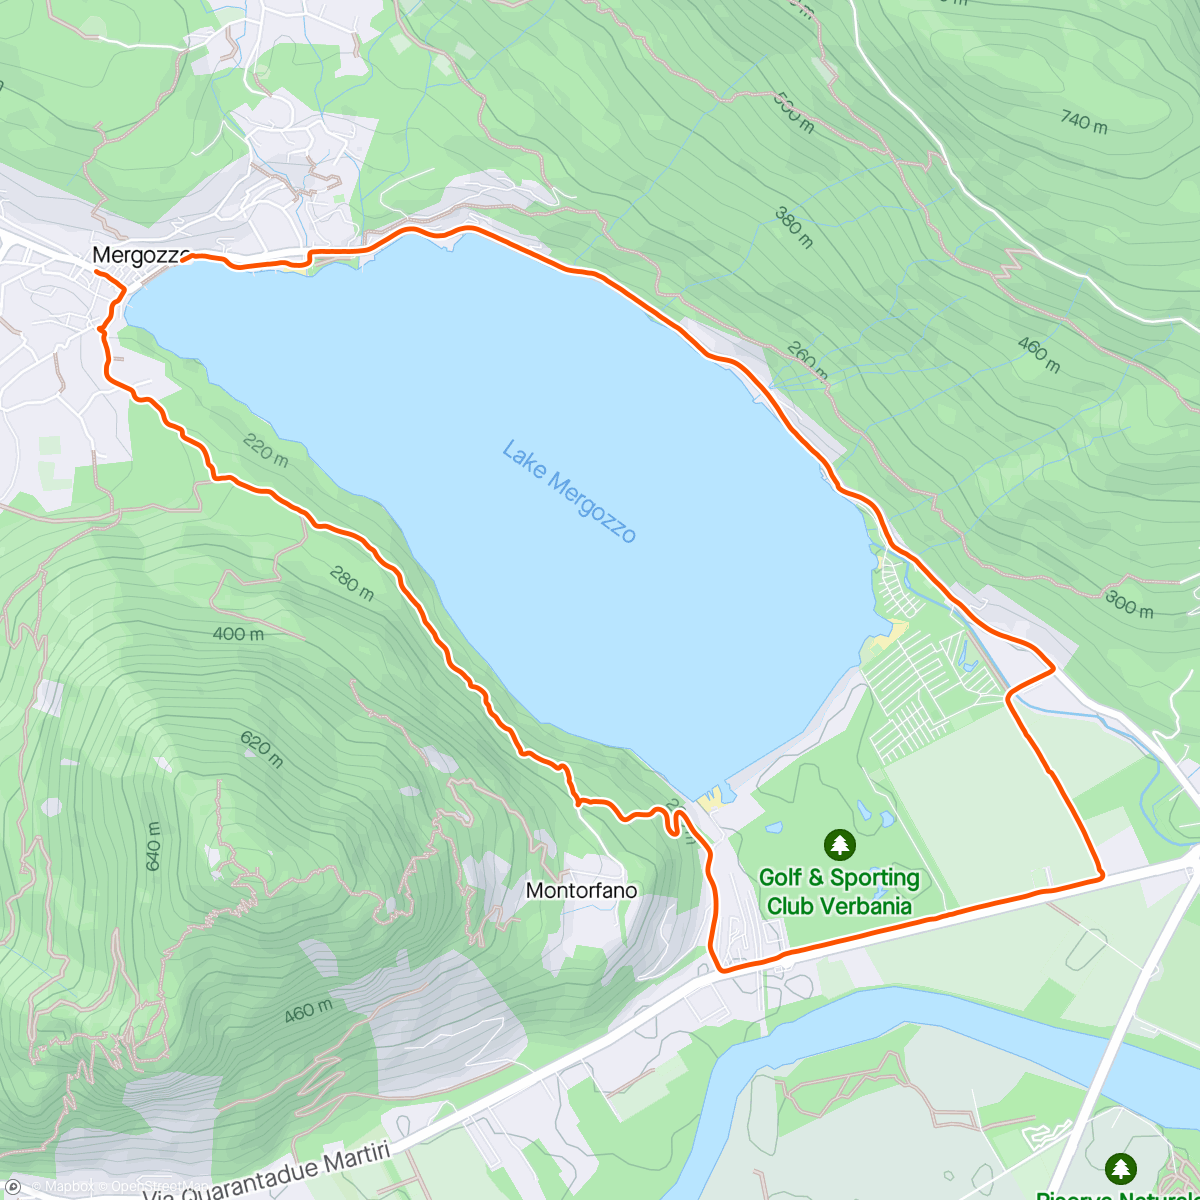 活动地图，Mergozzo lake